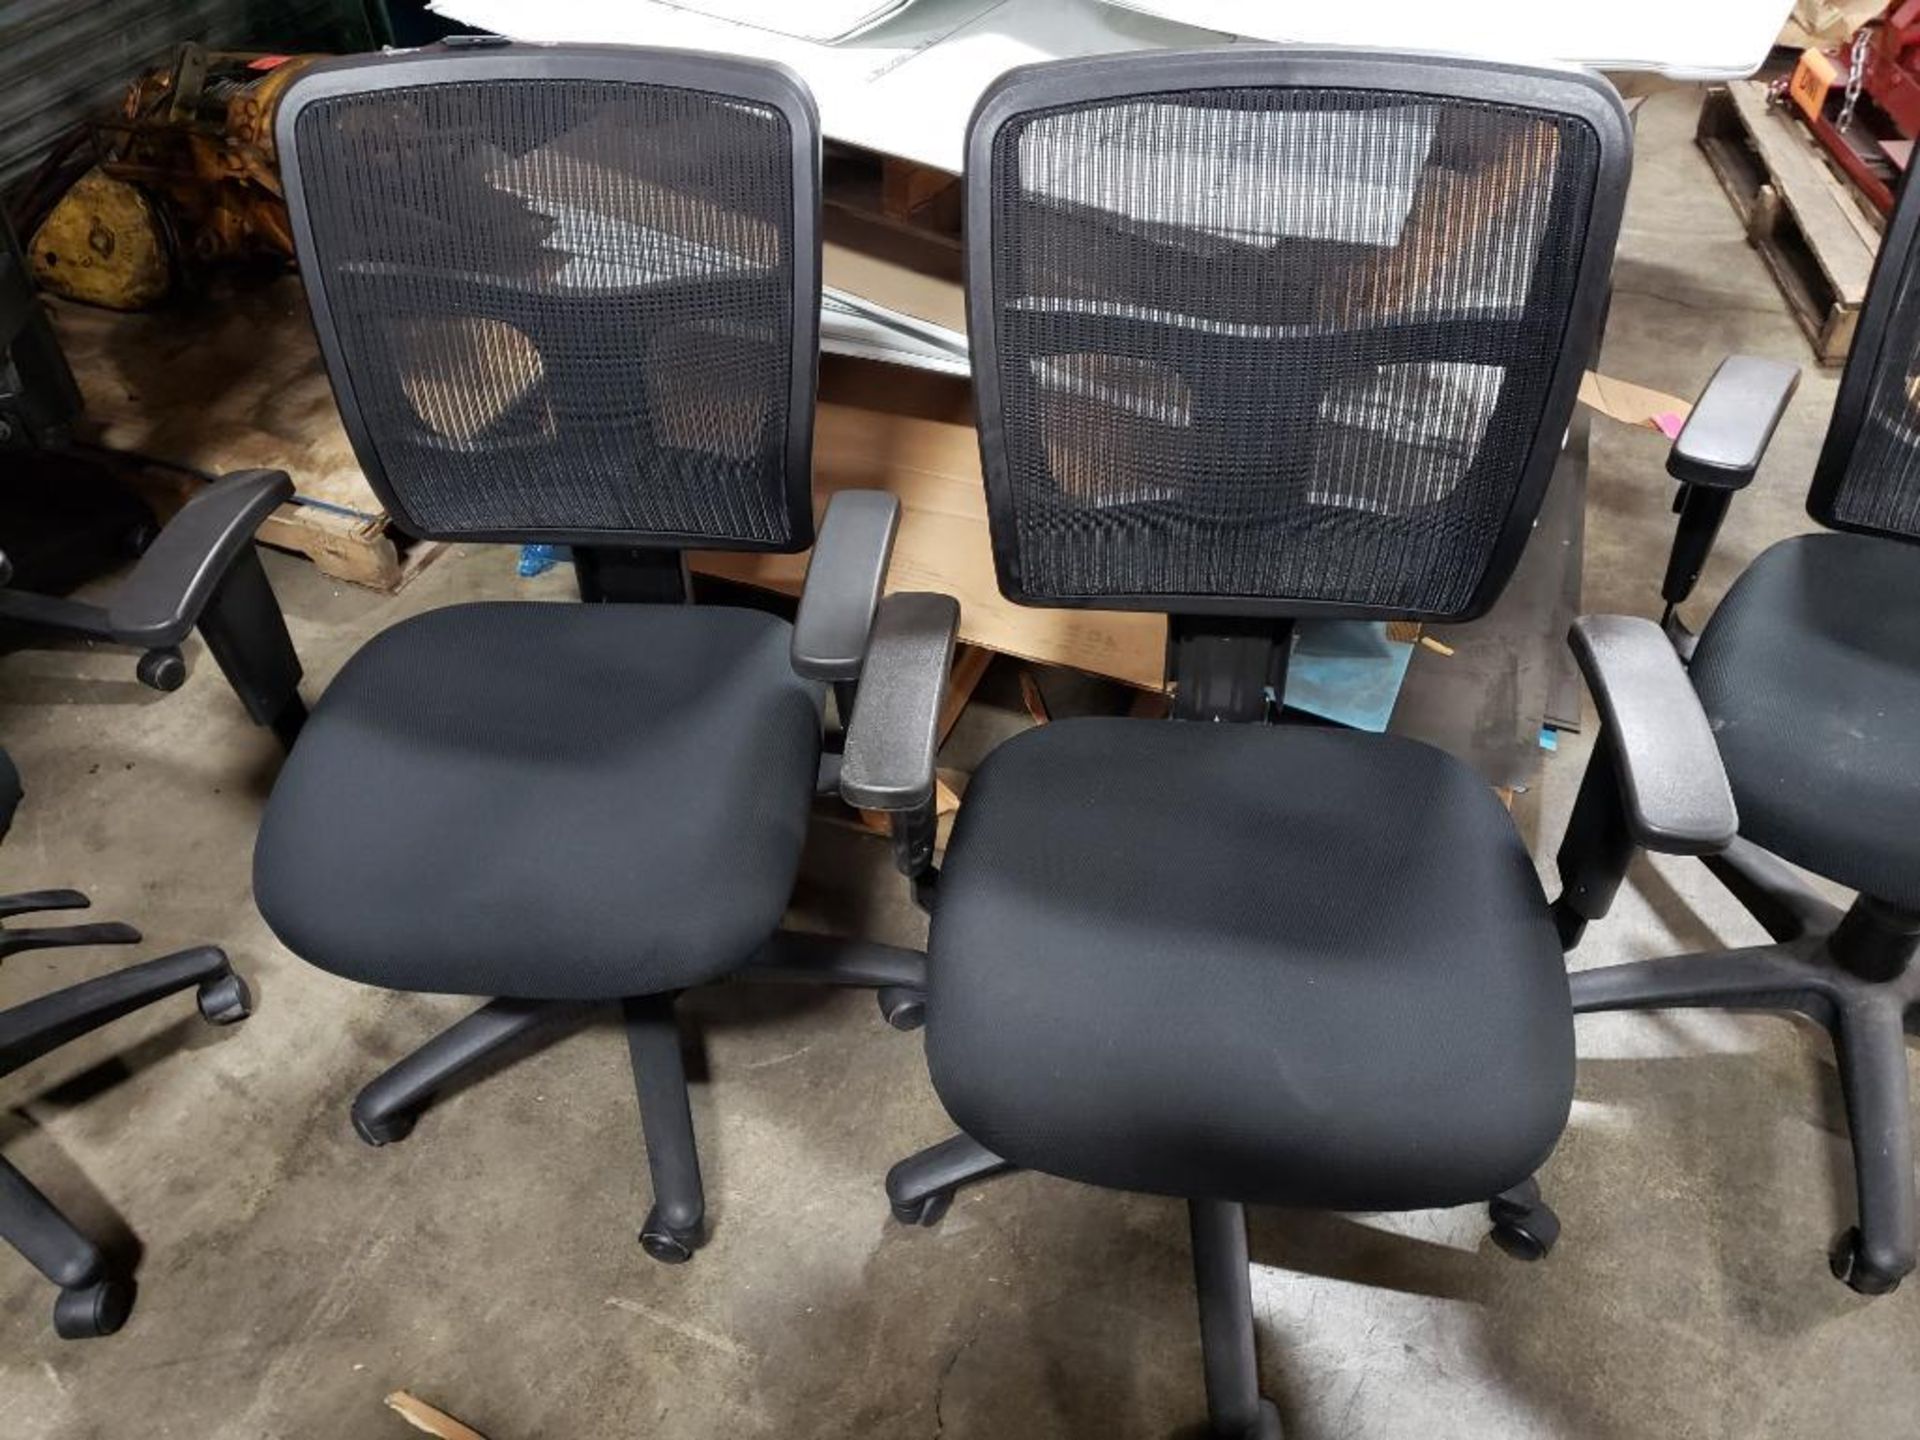 Qty 2 - Lorell mesh back office chair. LLR86802.